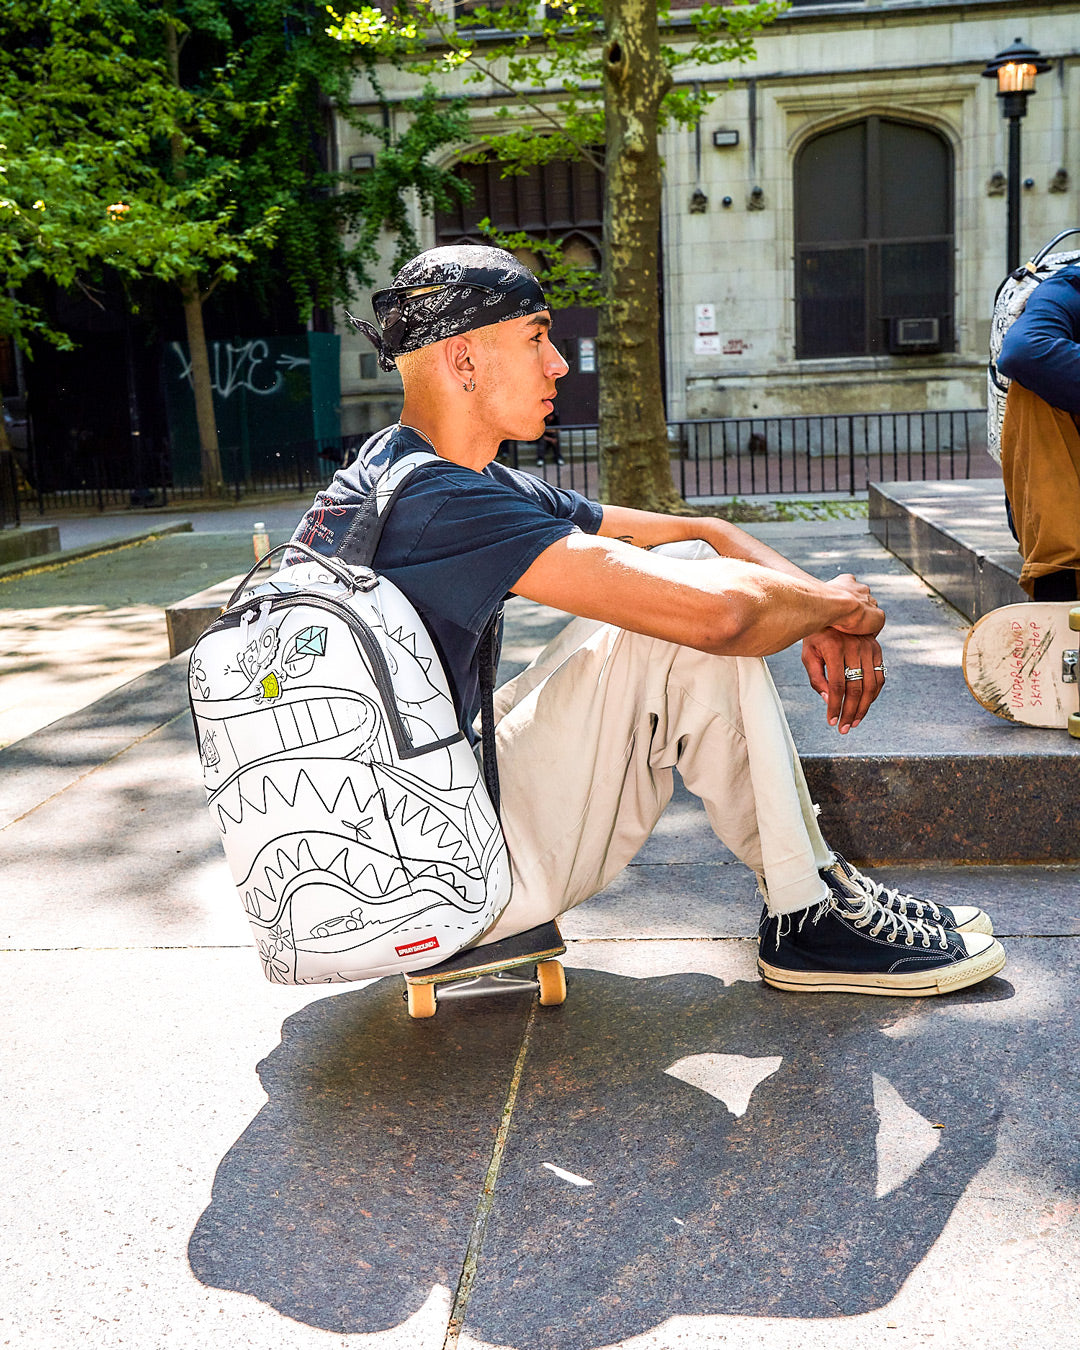 Sprayground Harlem Globetrotters Backpack